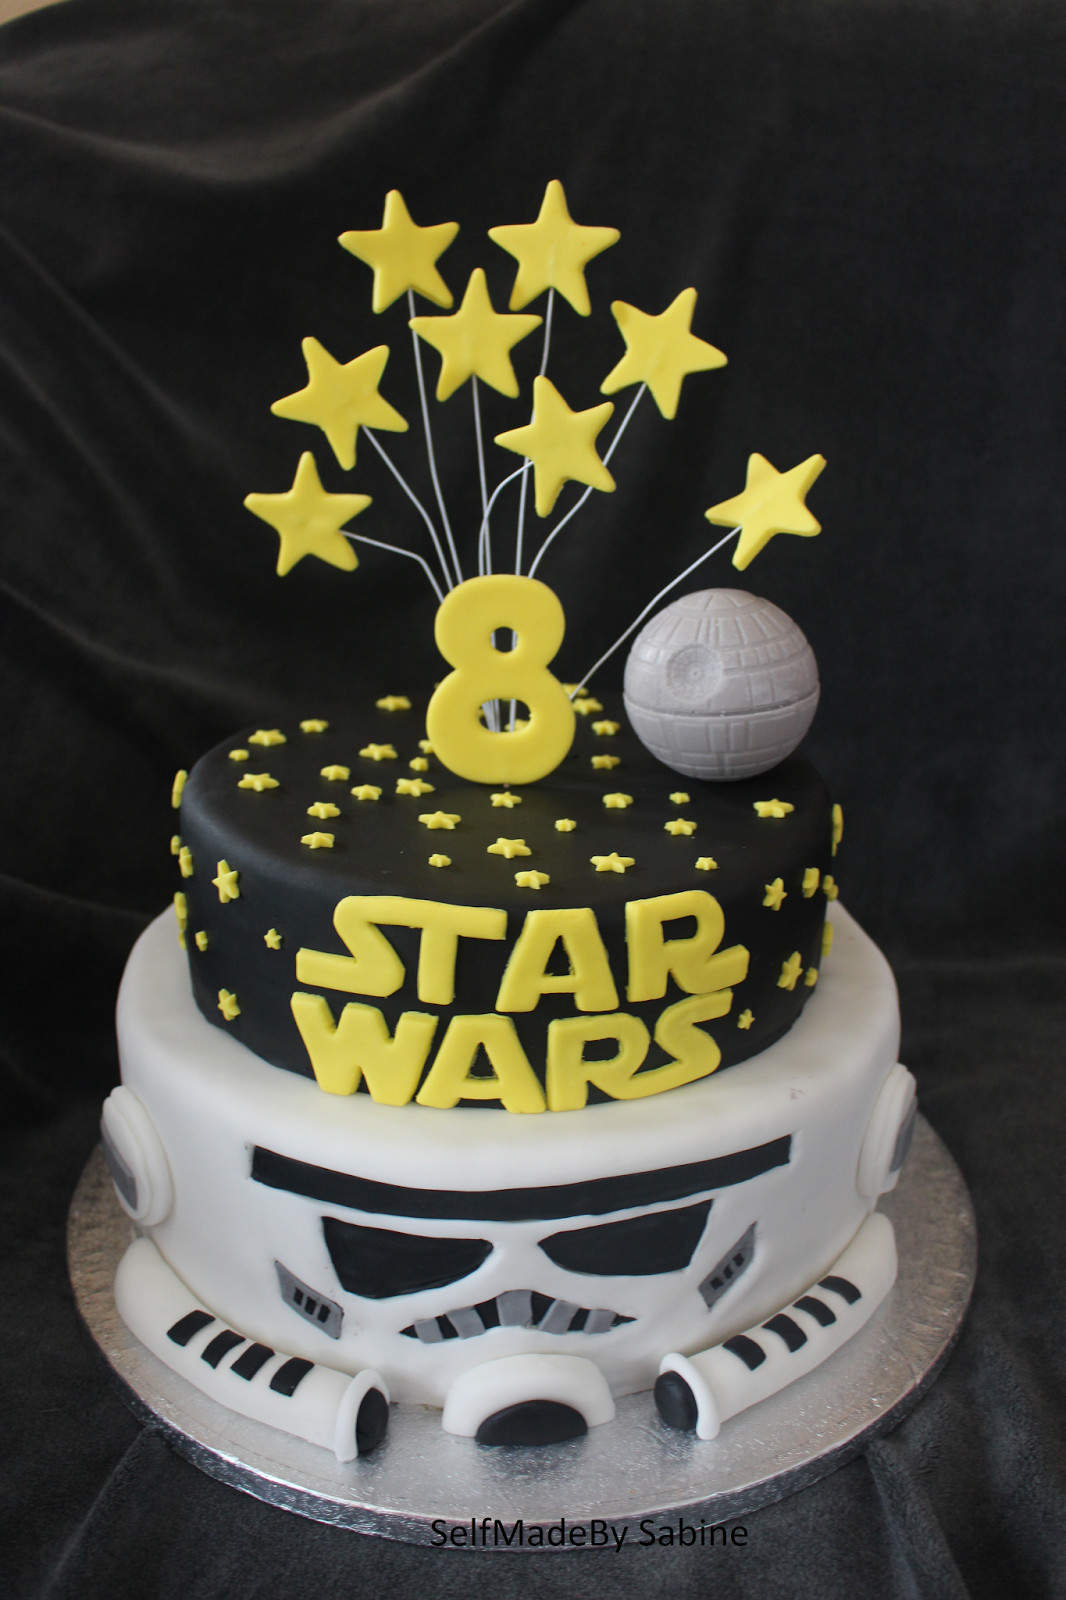 Star Wars Geburtstagstorte
 SelfMadeby Sabine Star Wars Geburtstagstorte